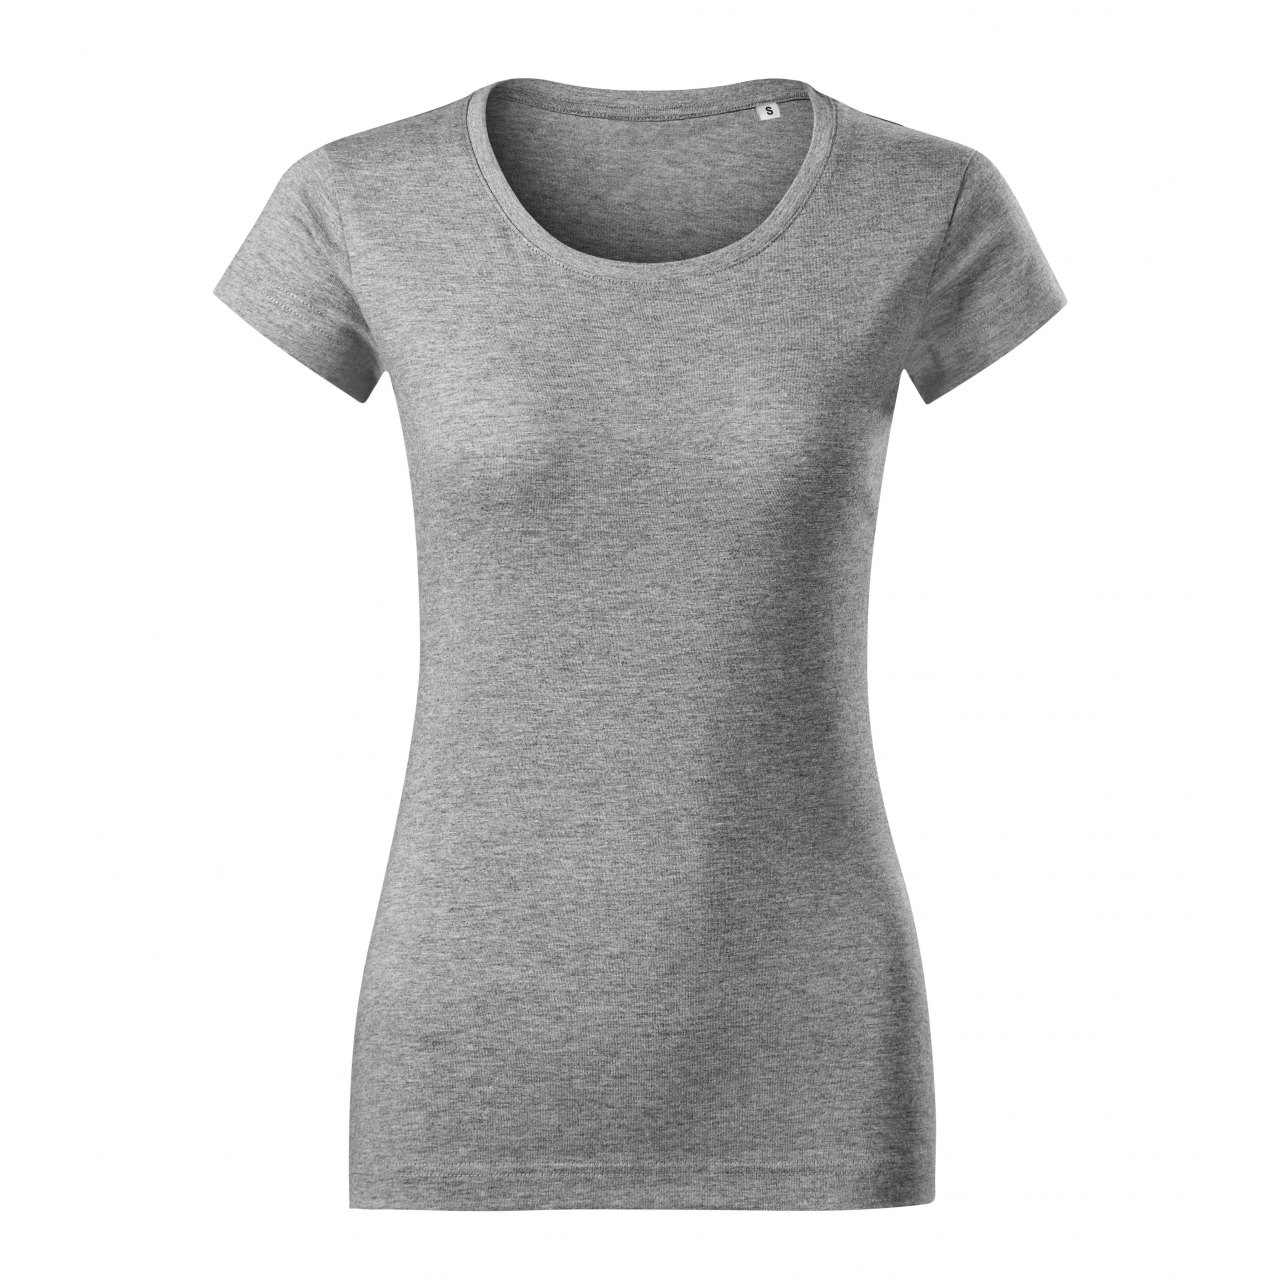 Tričko dámské Malfini Viper Free - šedé, XL